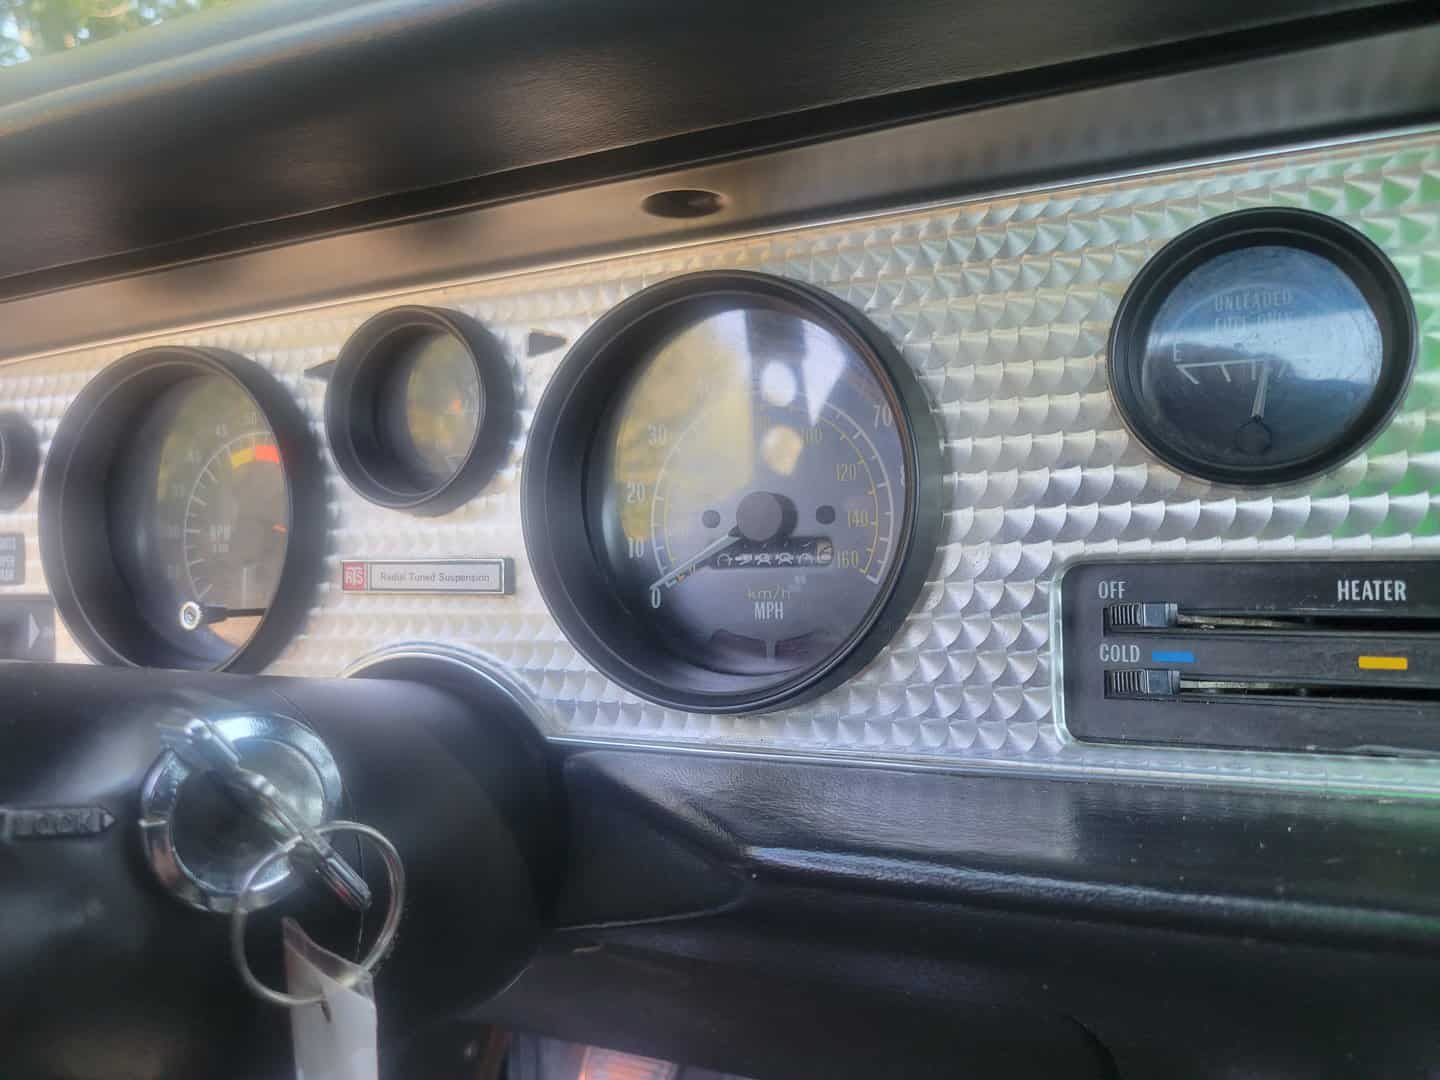 The dashboard of a 1979 Pontiac Firebird with gauges and gauges.